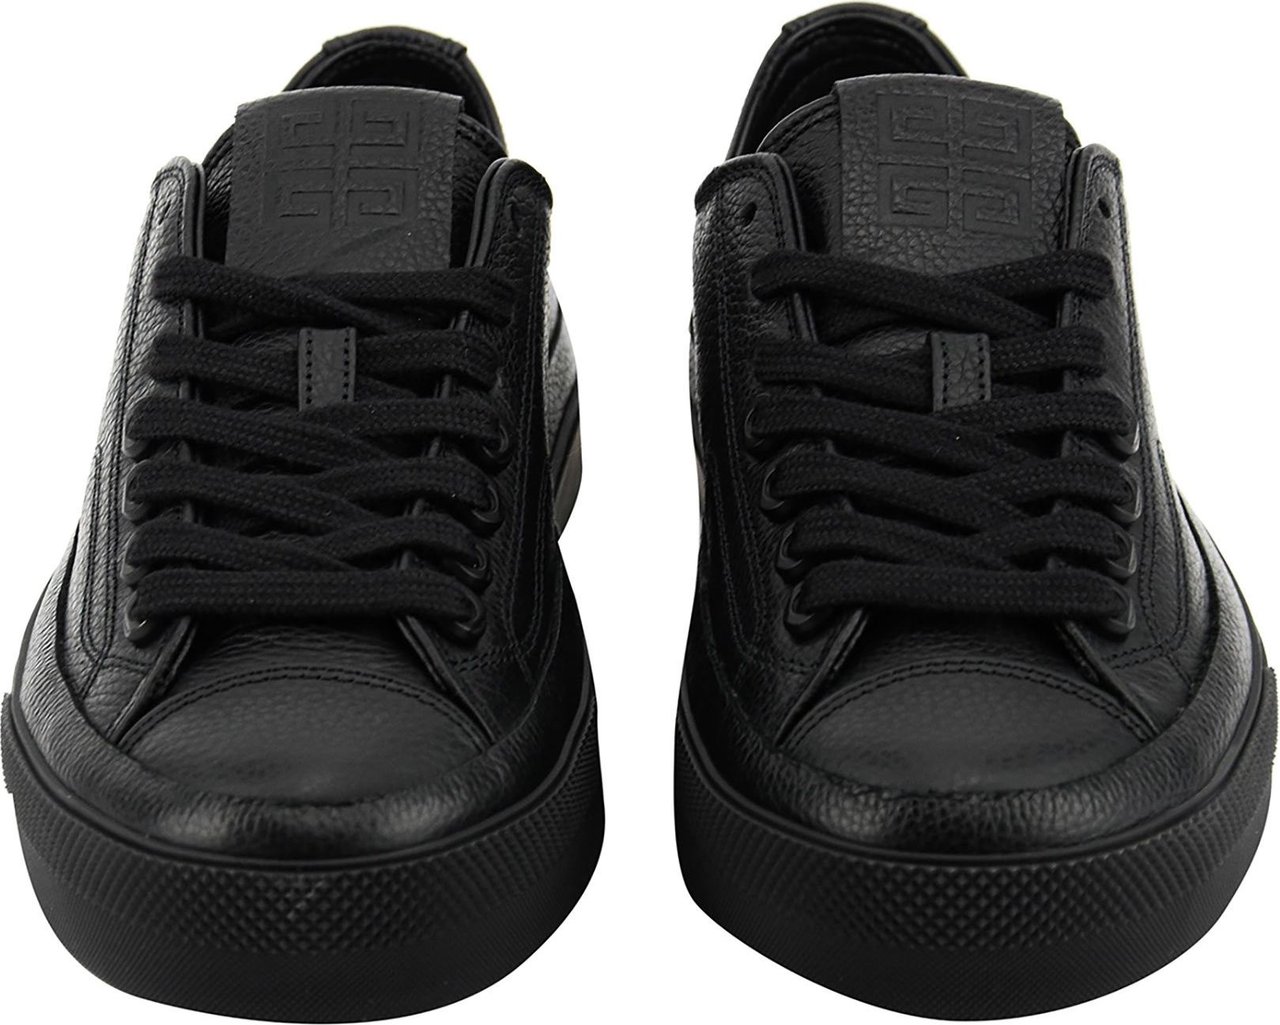 Givenchy City Sneaker Black Zwart